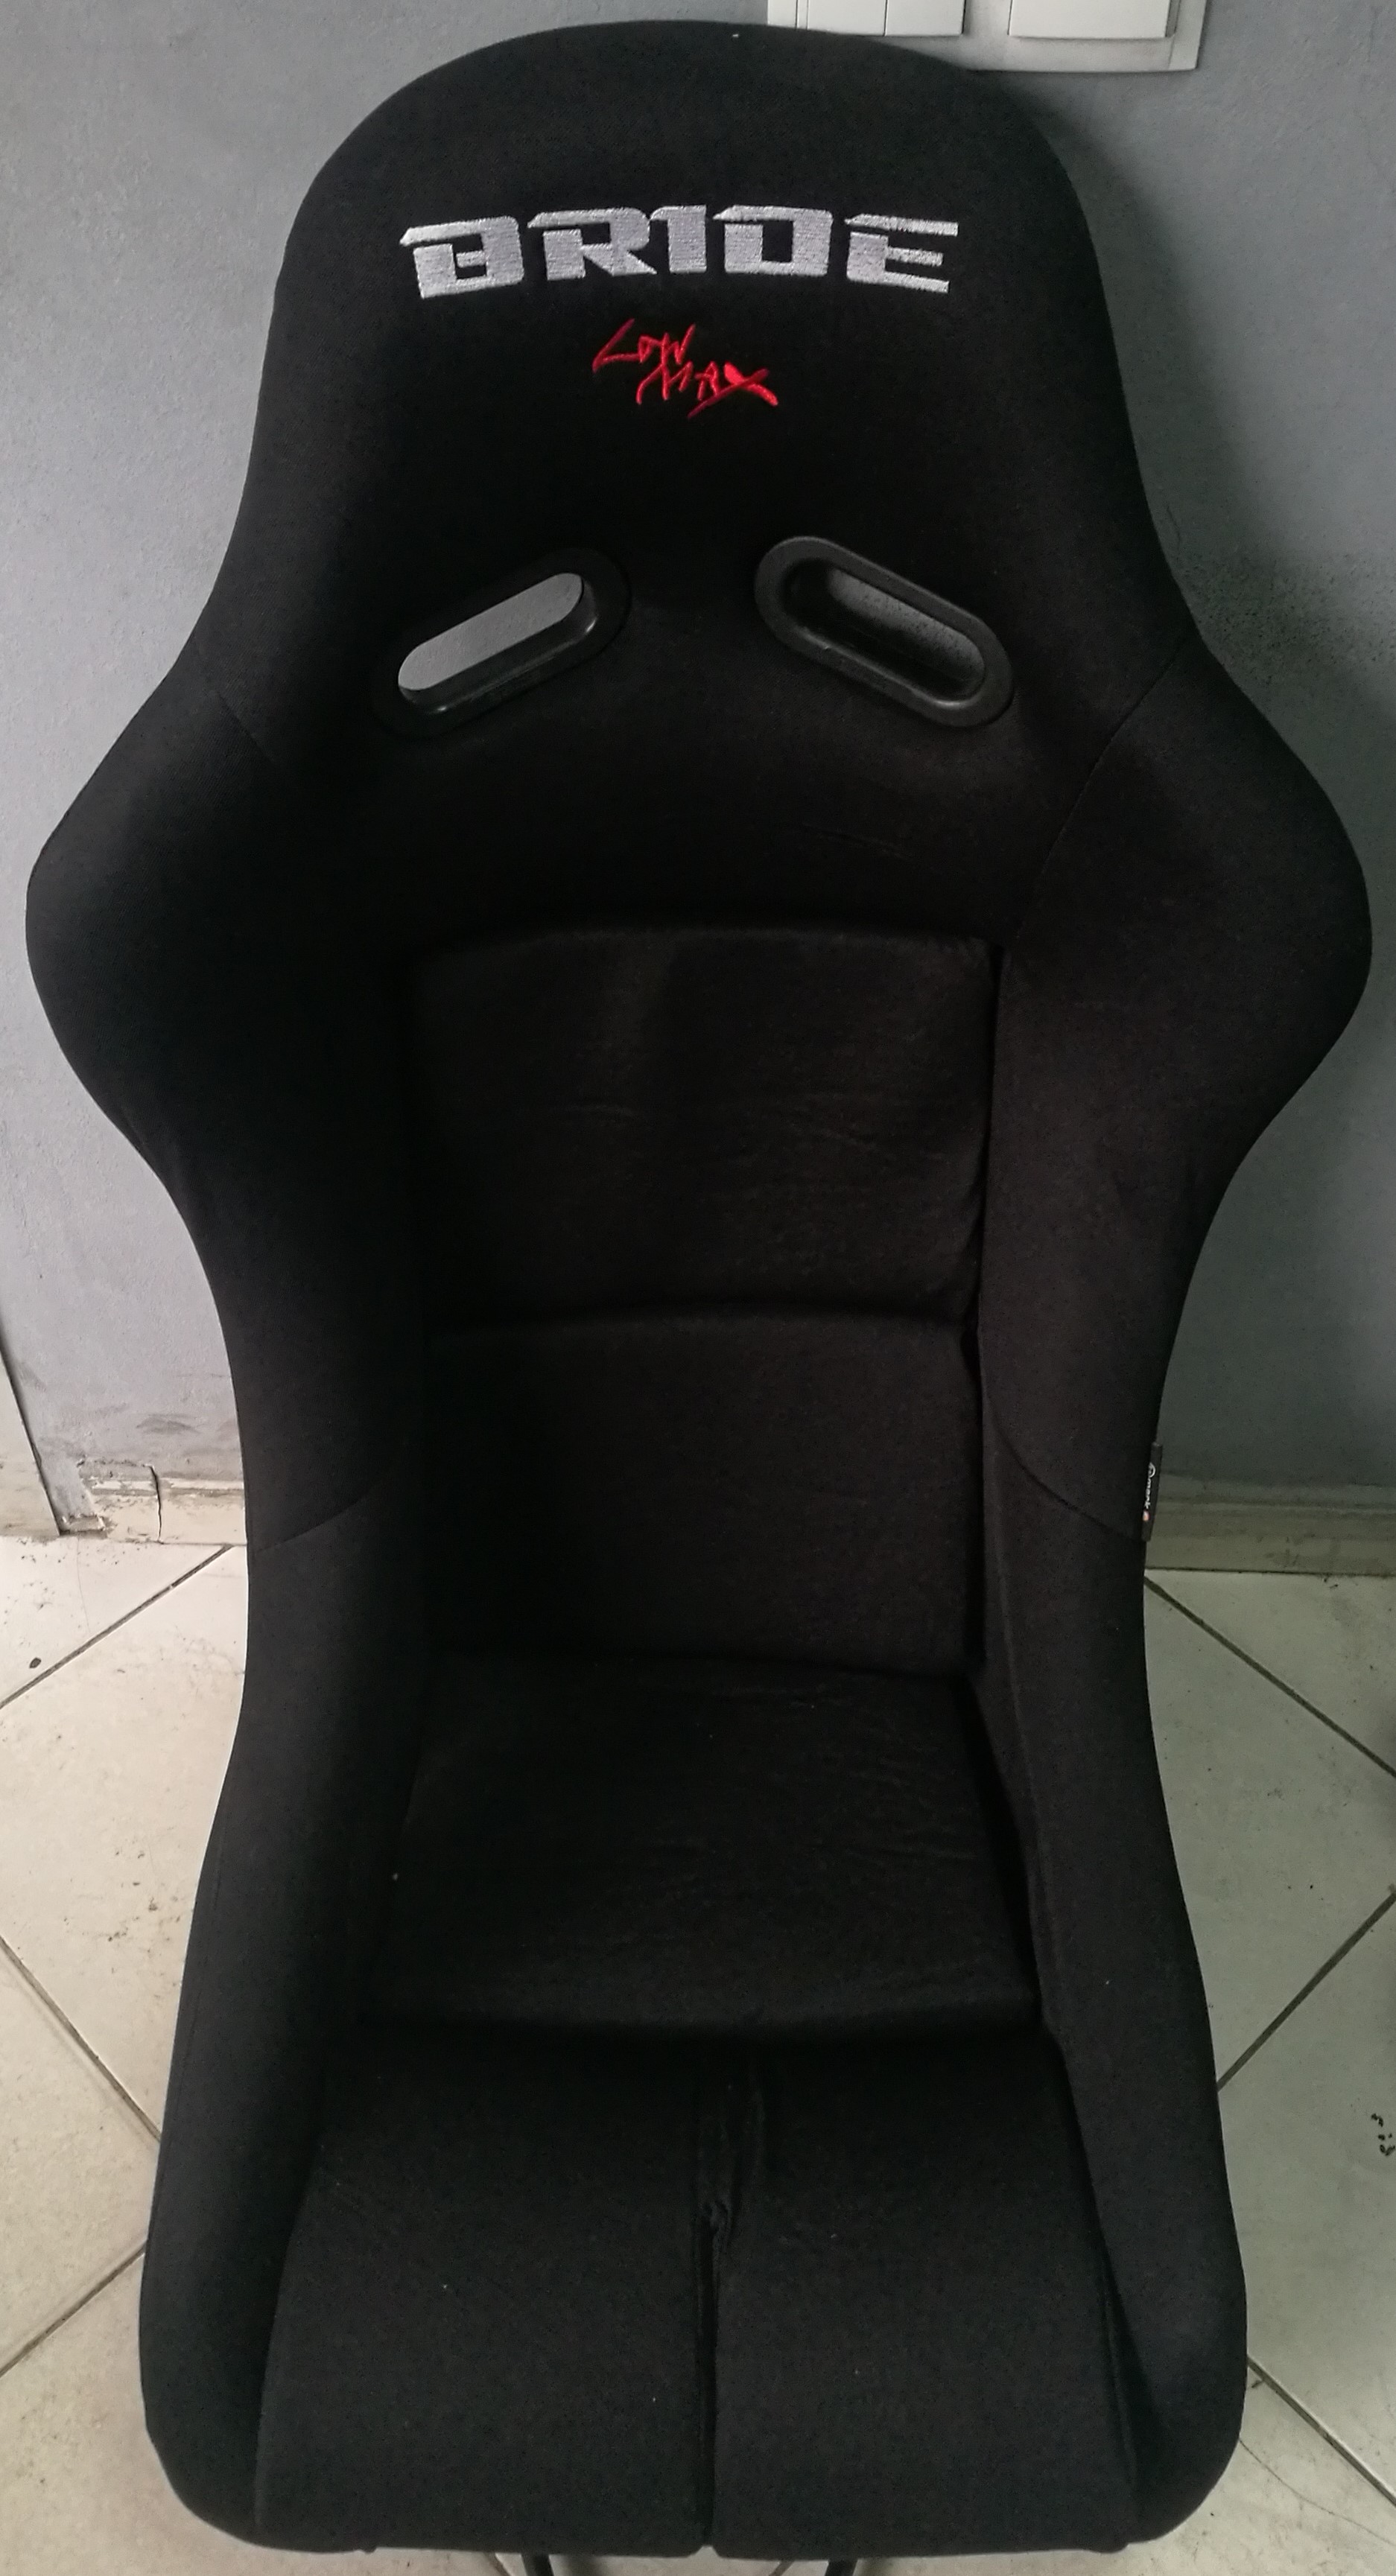 Bride Seat (Black)